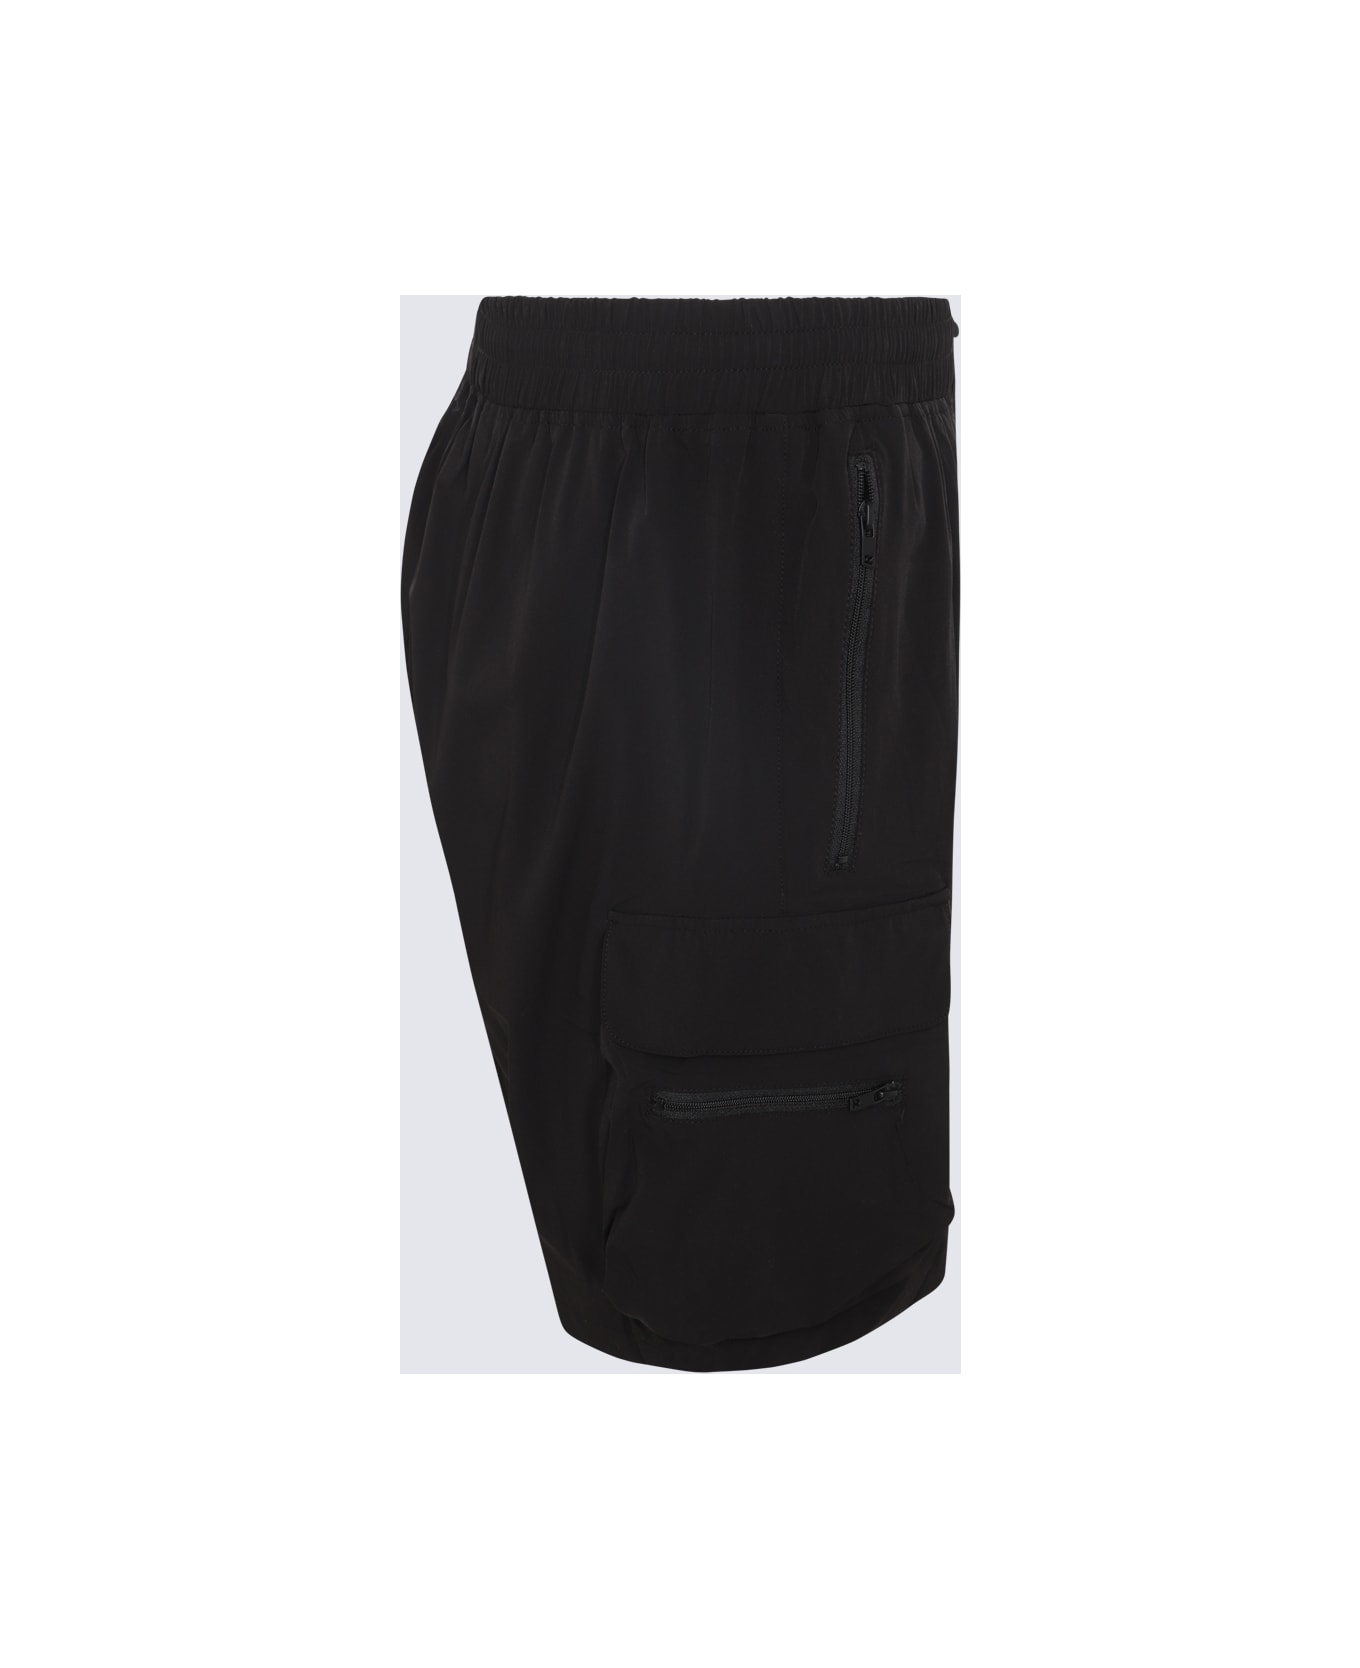 REPRESENT Black Nylon Shorts - Black